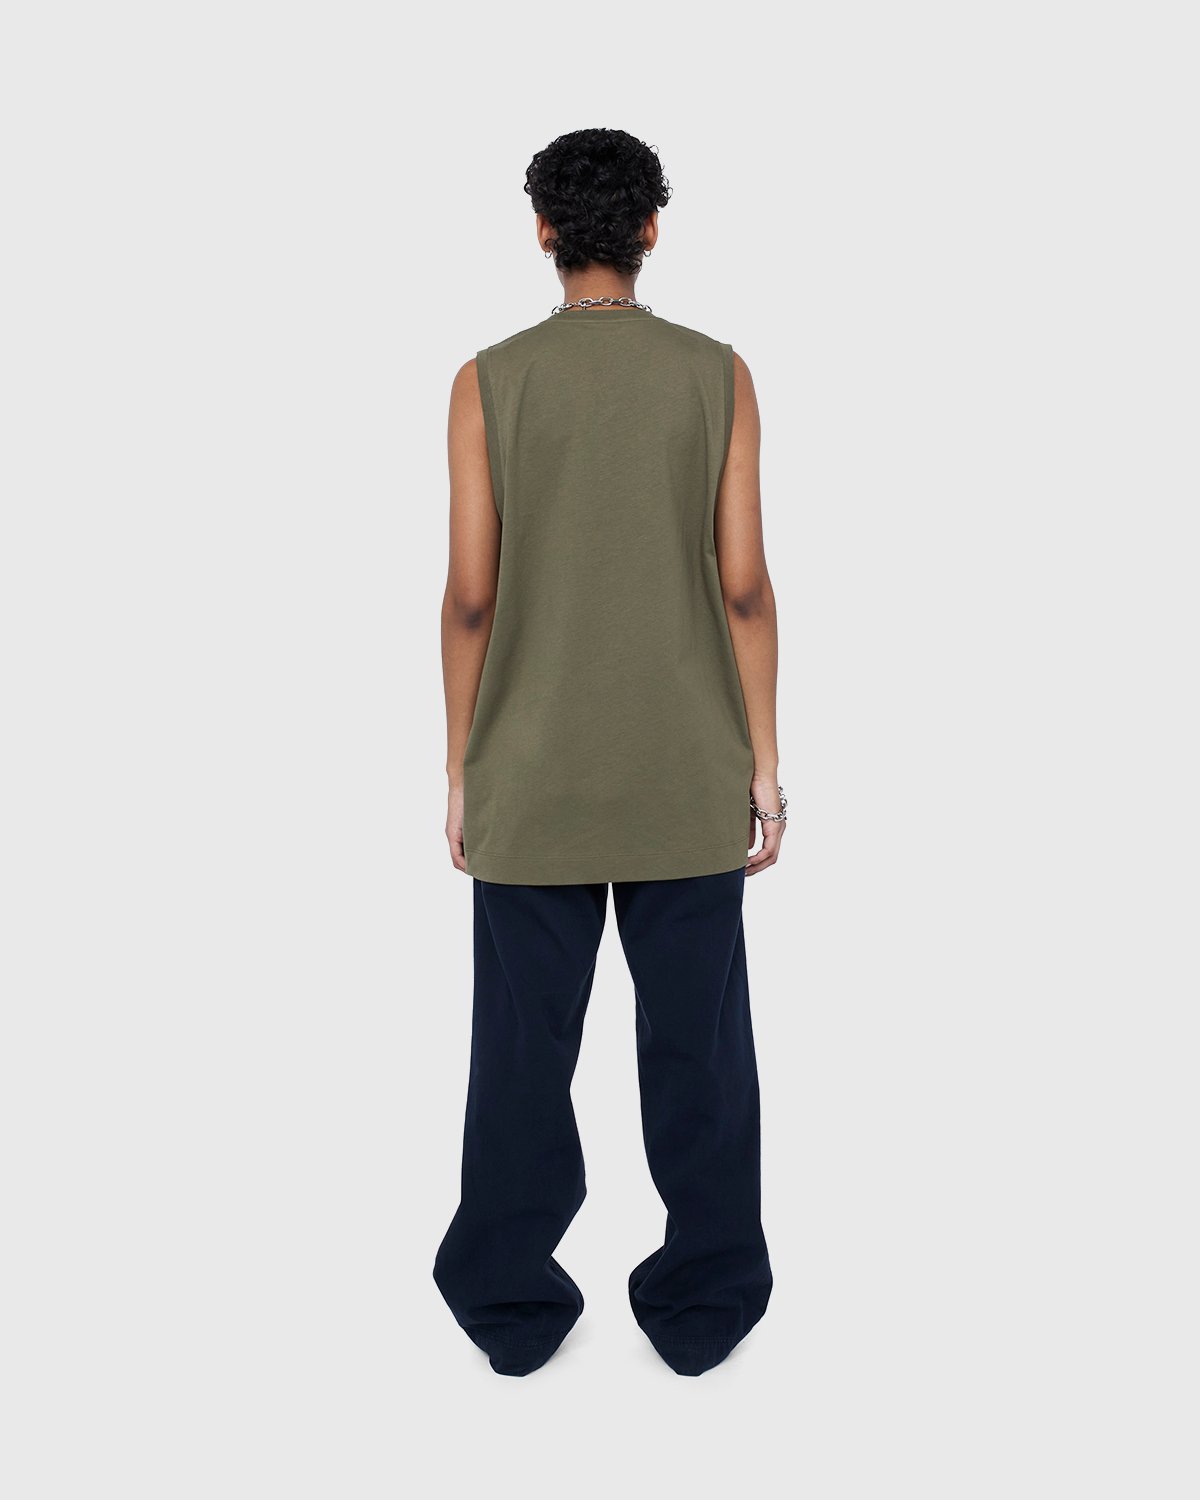 Dries van Noten - Heneta Cotton Tank Top Khaki - Clothing - Green - Image 6